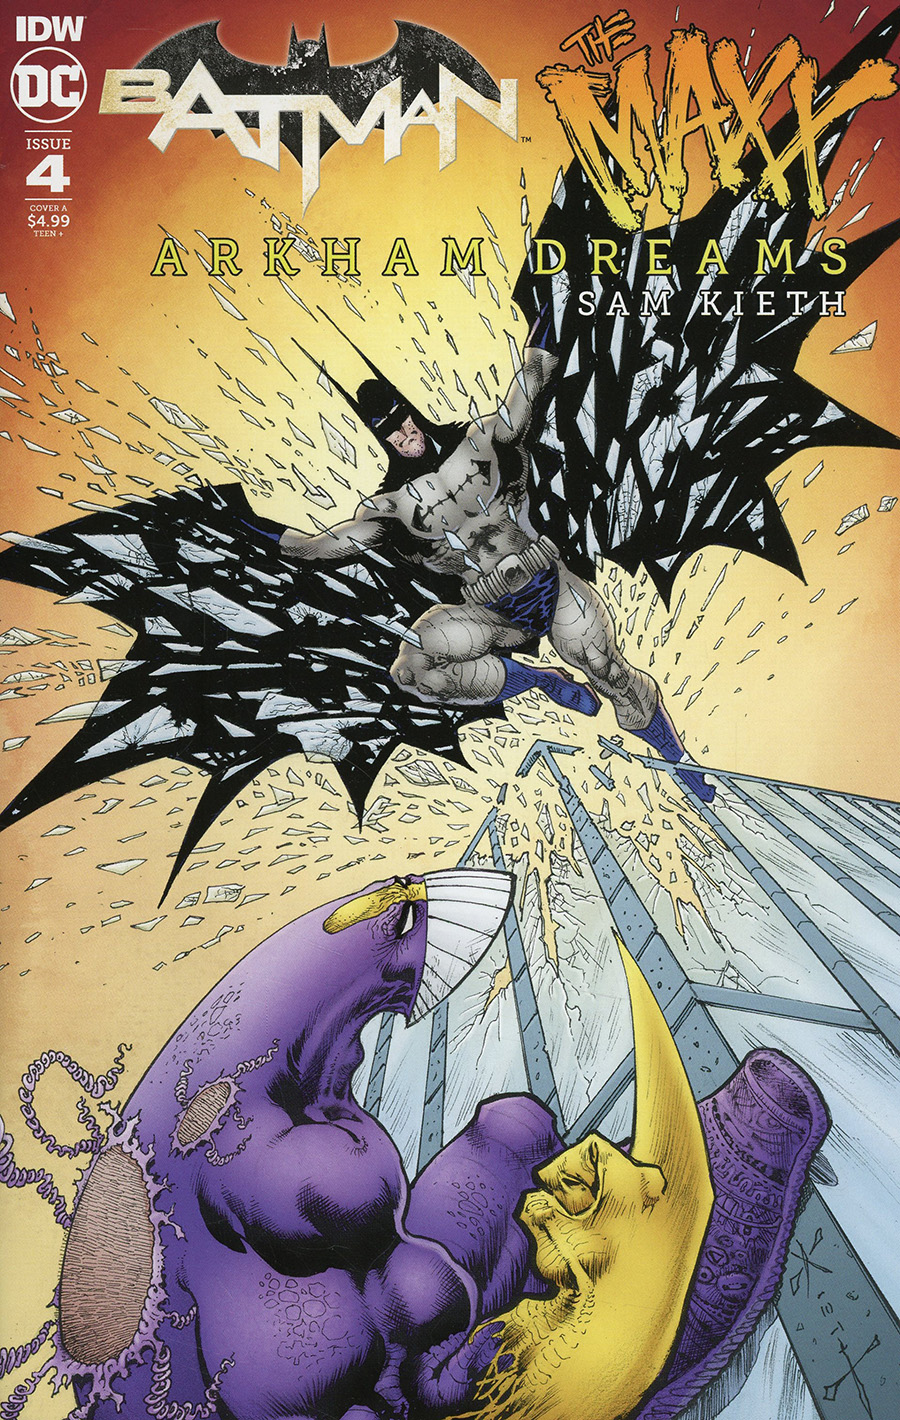 BATMAN THE MAXX ARKHAM DREAMS #3 COVER A 